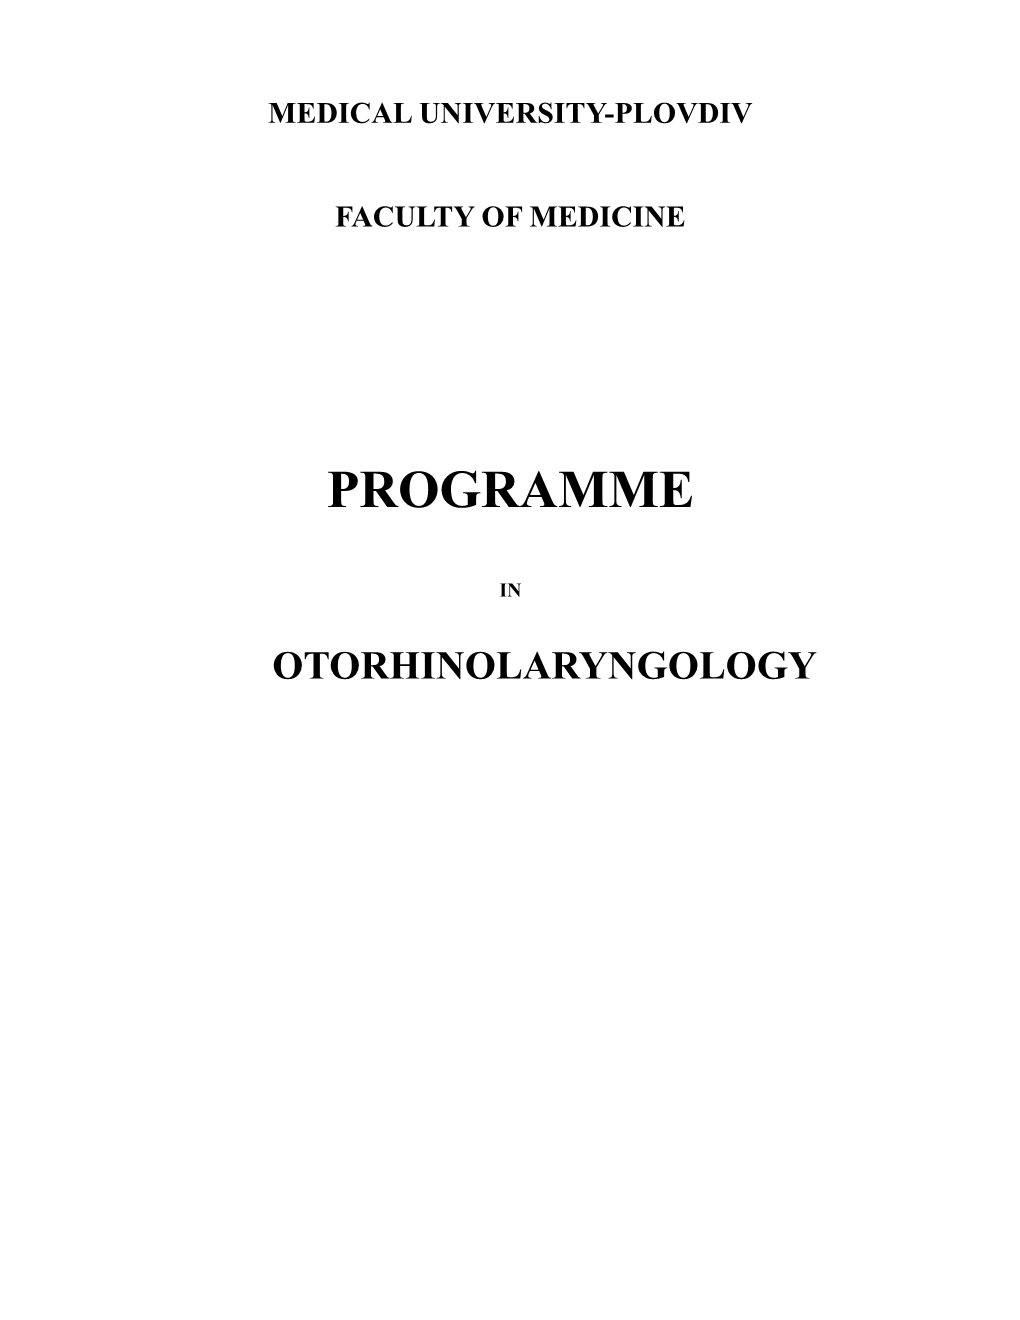 Programme in Otorhinolaryngology